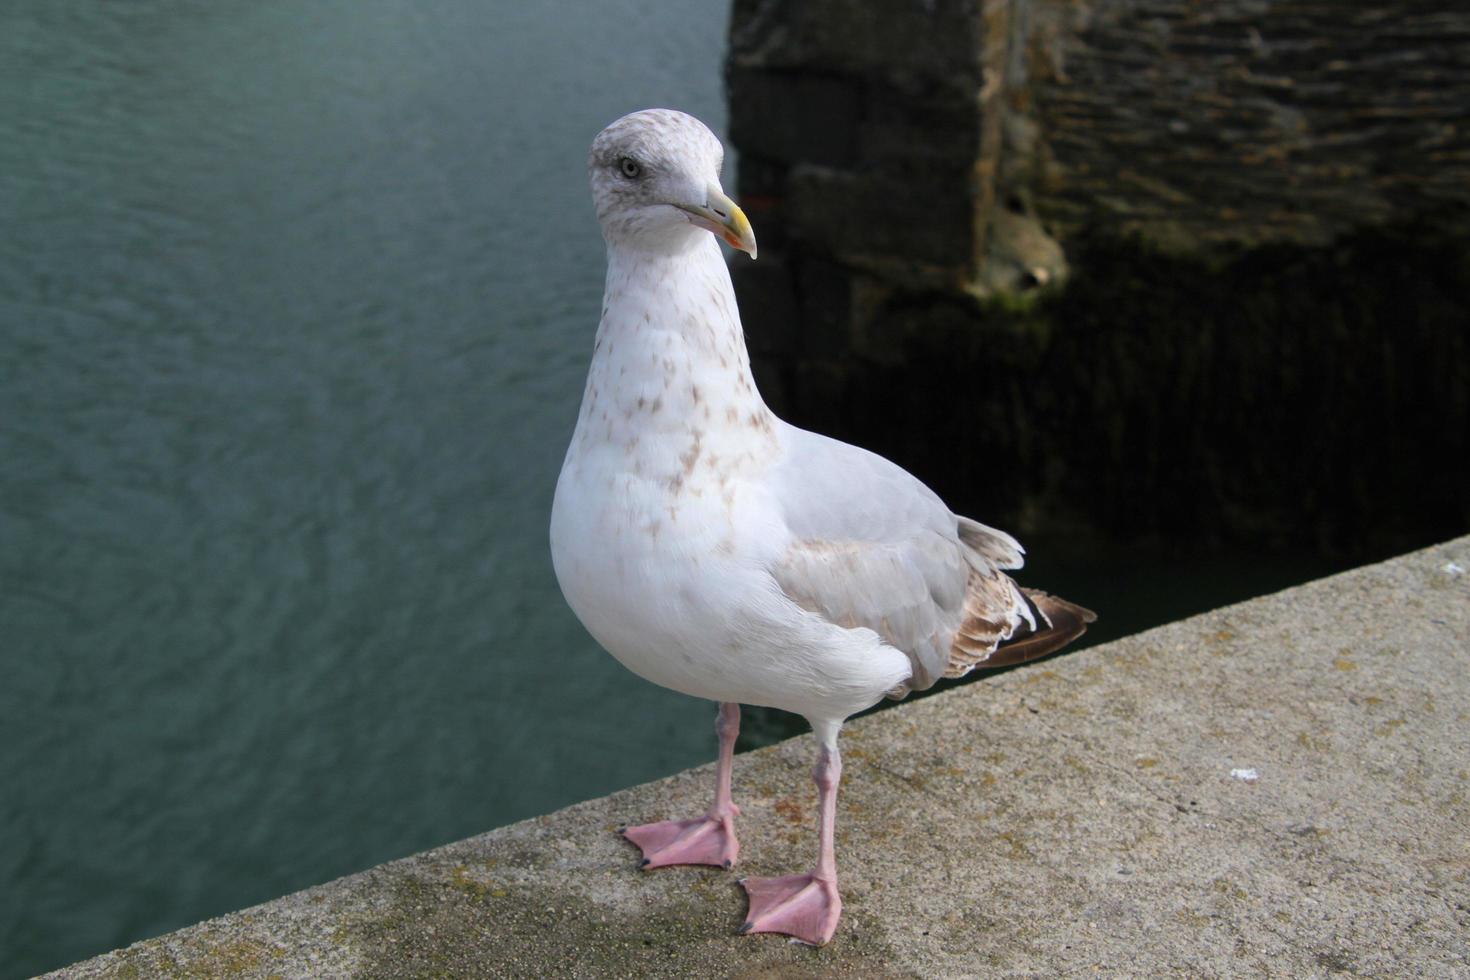 A view of a Herring Gull near the sea photo